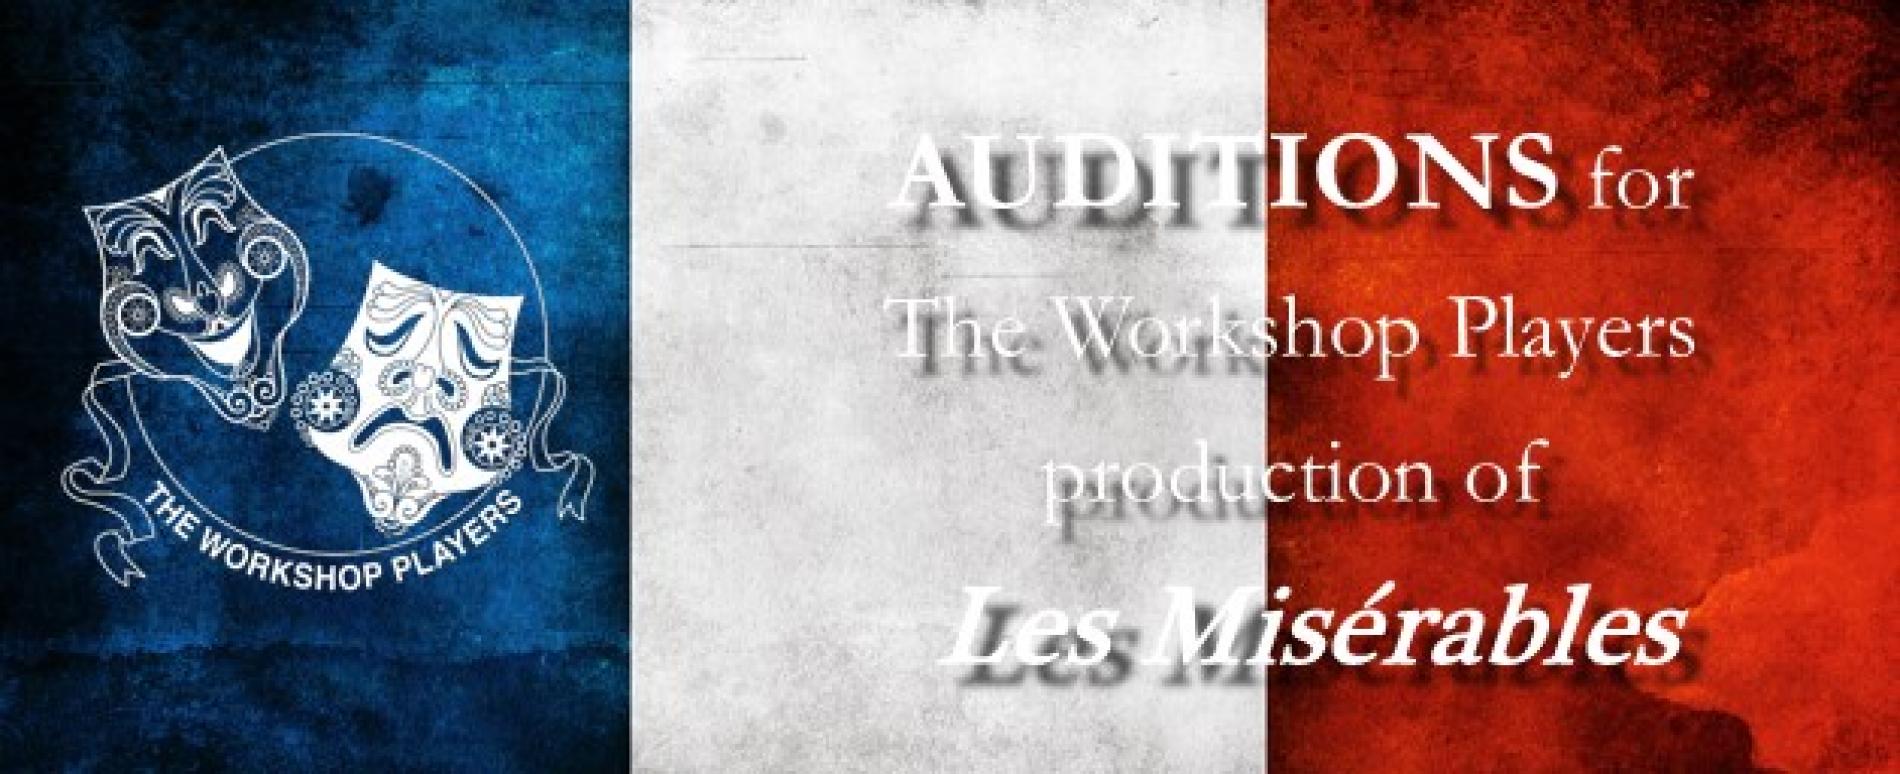 Auditions for The Workshop Players’ production of Les Misérables